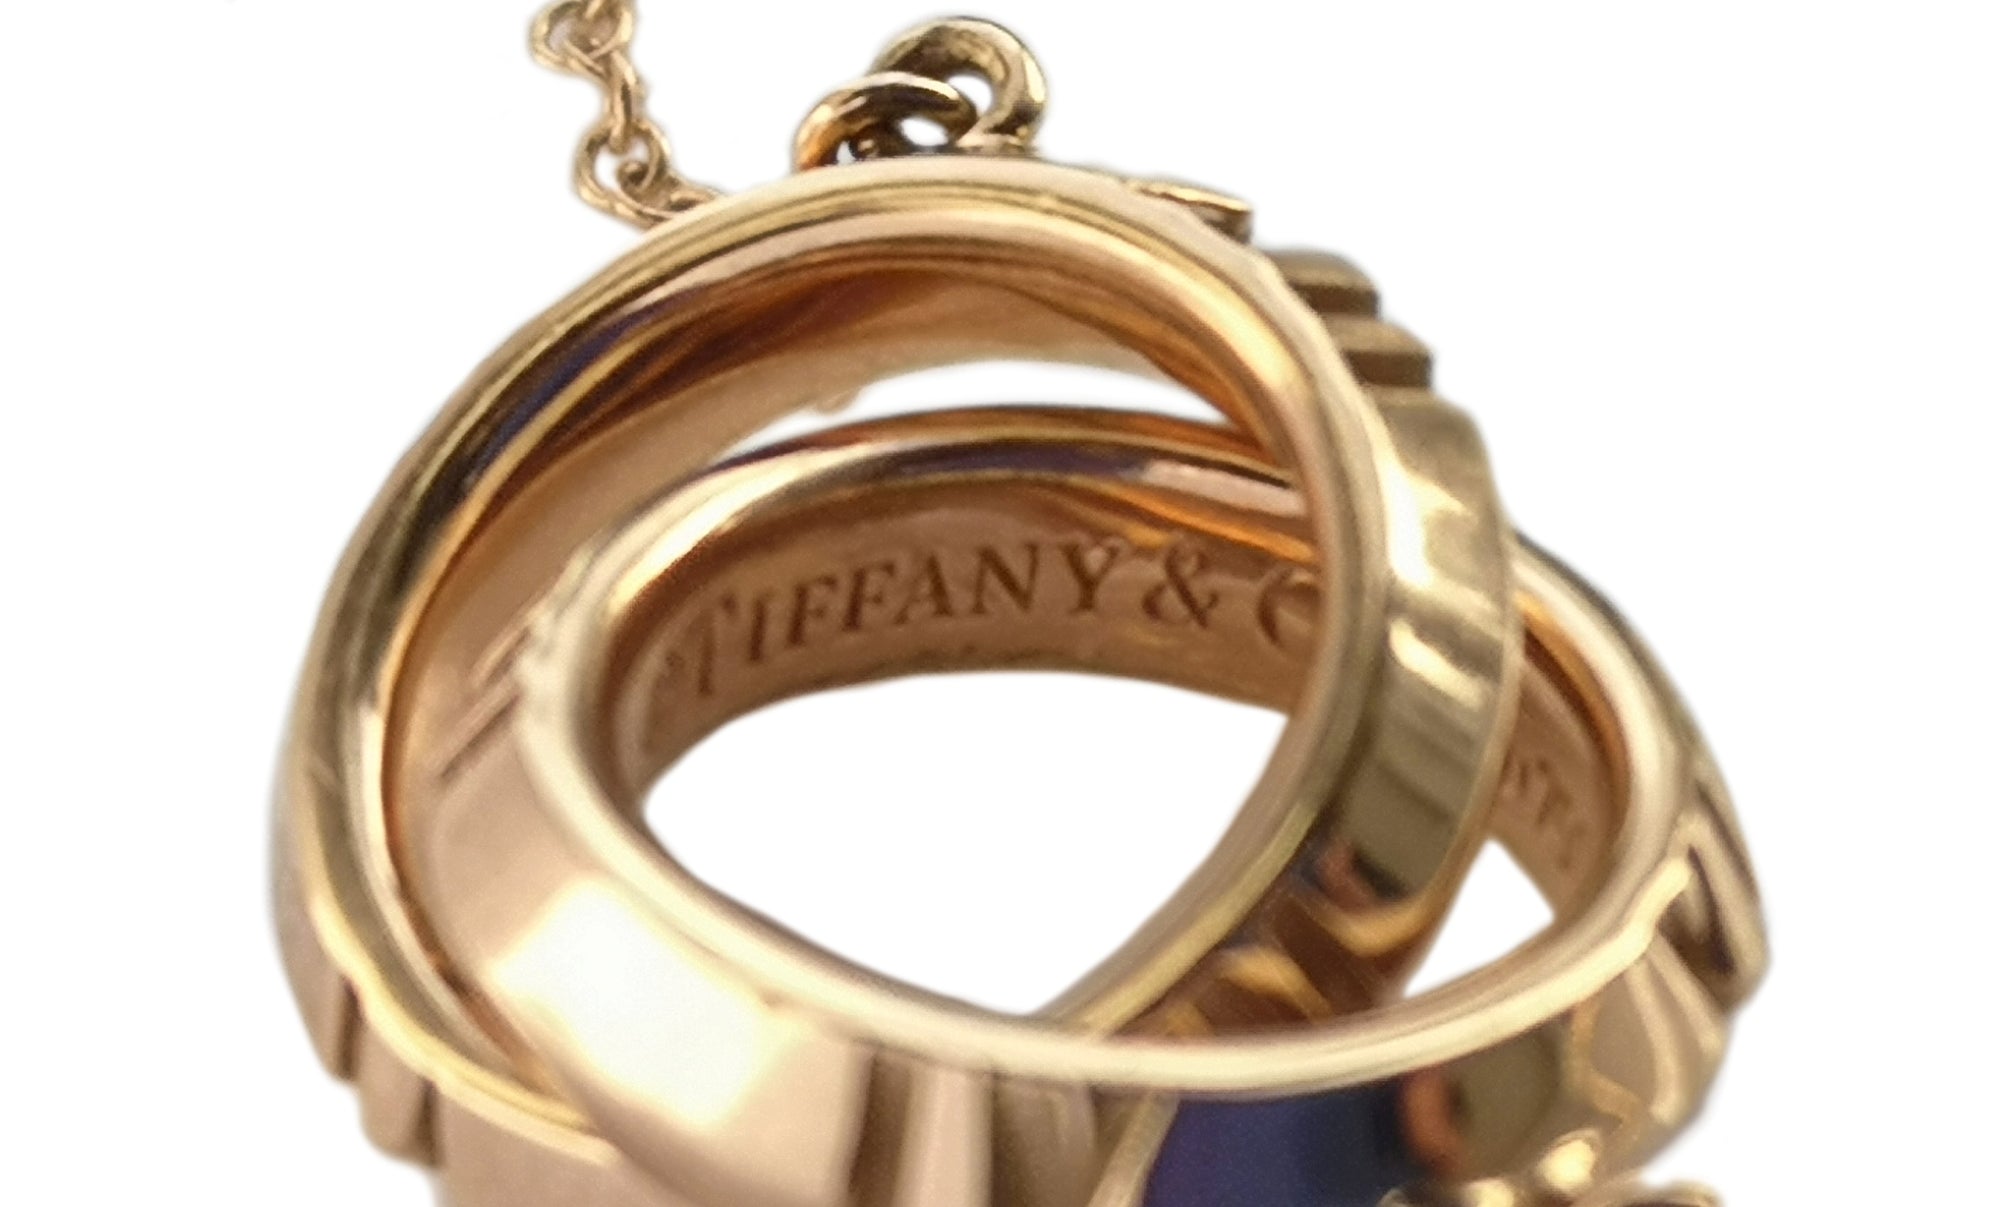 Tiffany & Co. Atlas® X Closed Interlocking Pendant, in 18k Rose Gold